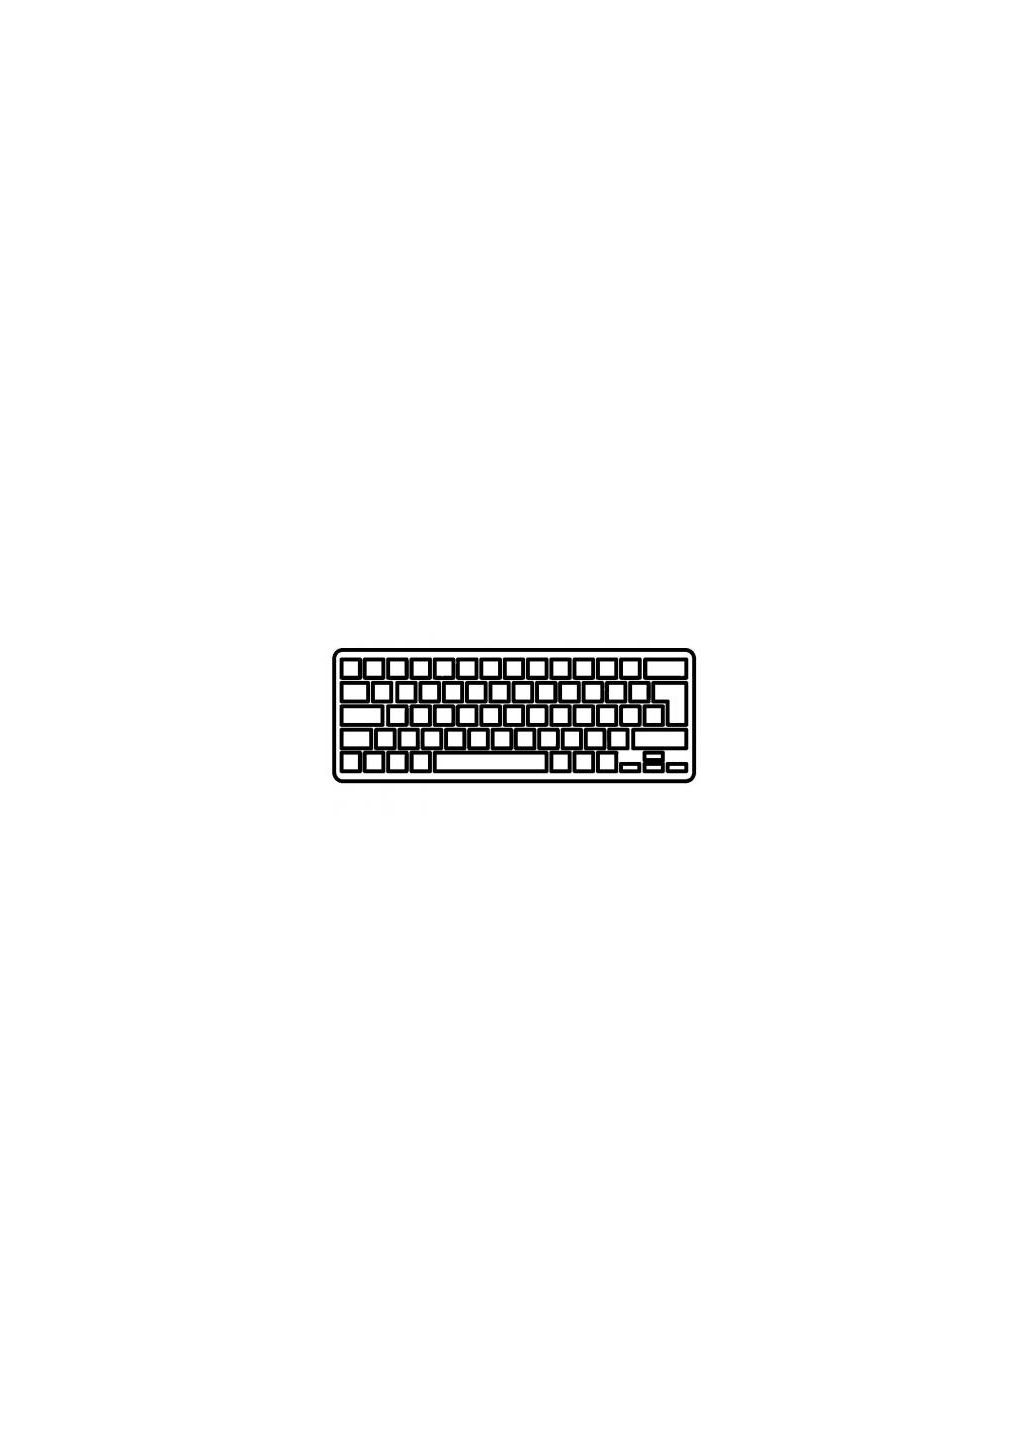 Клавиатура ноутбука Pro 15.4 A1286 (20092012) black,wo/frame,backlight RU/US (A46009) Apple pro 15.4 a1286 (2009-2012) black, wo/frame, backligh (276707499)